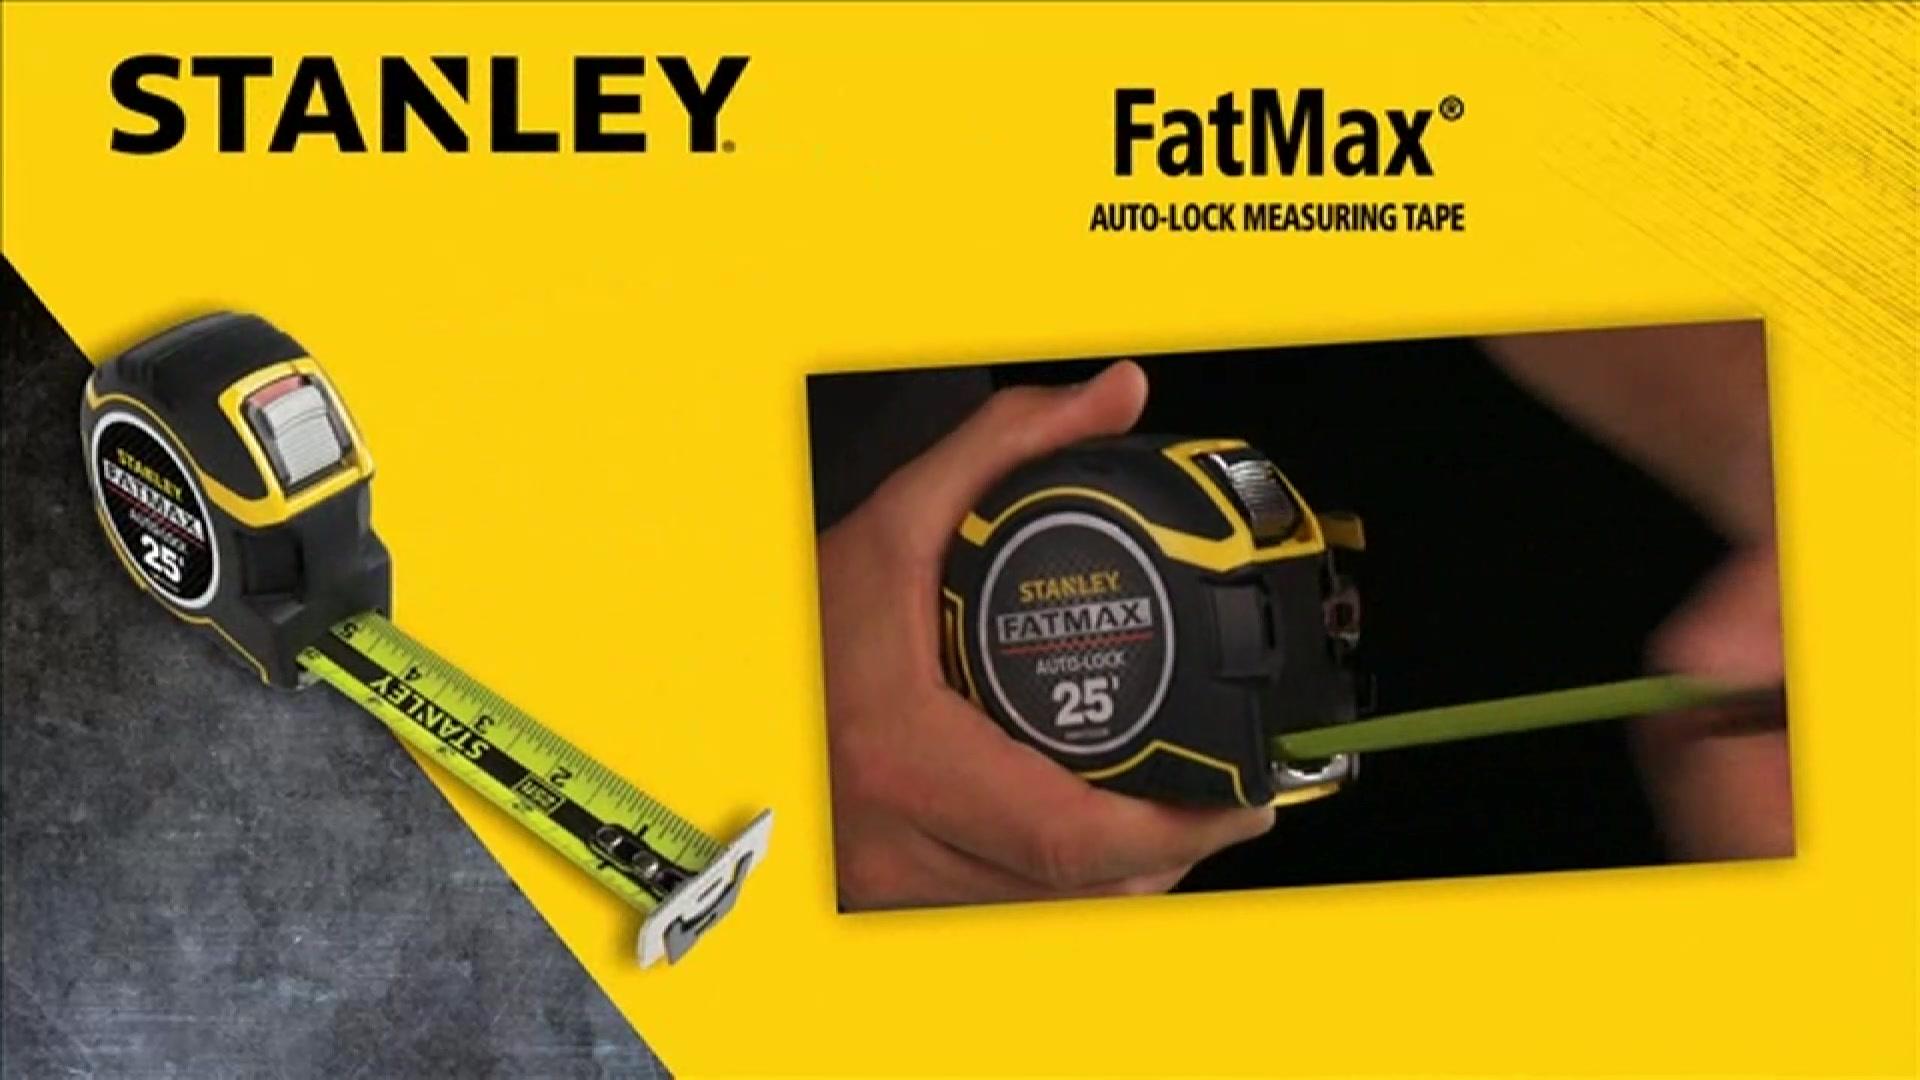 Stanley 33-726 8m/26-Feet by 1-1/4-Inch FatMax Metric/Fractional Tape Rule 